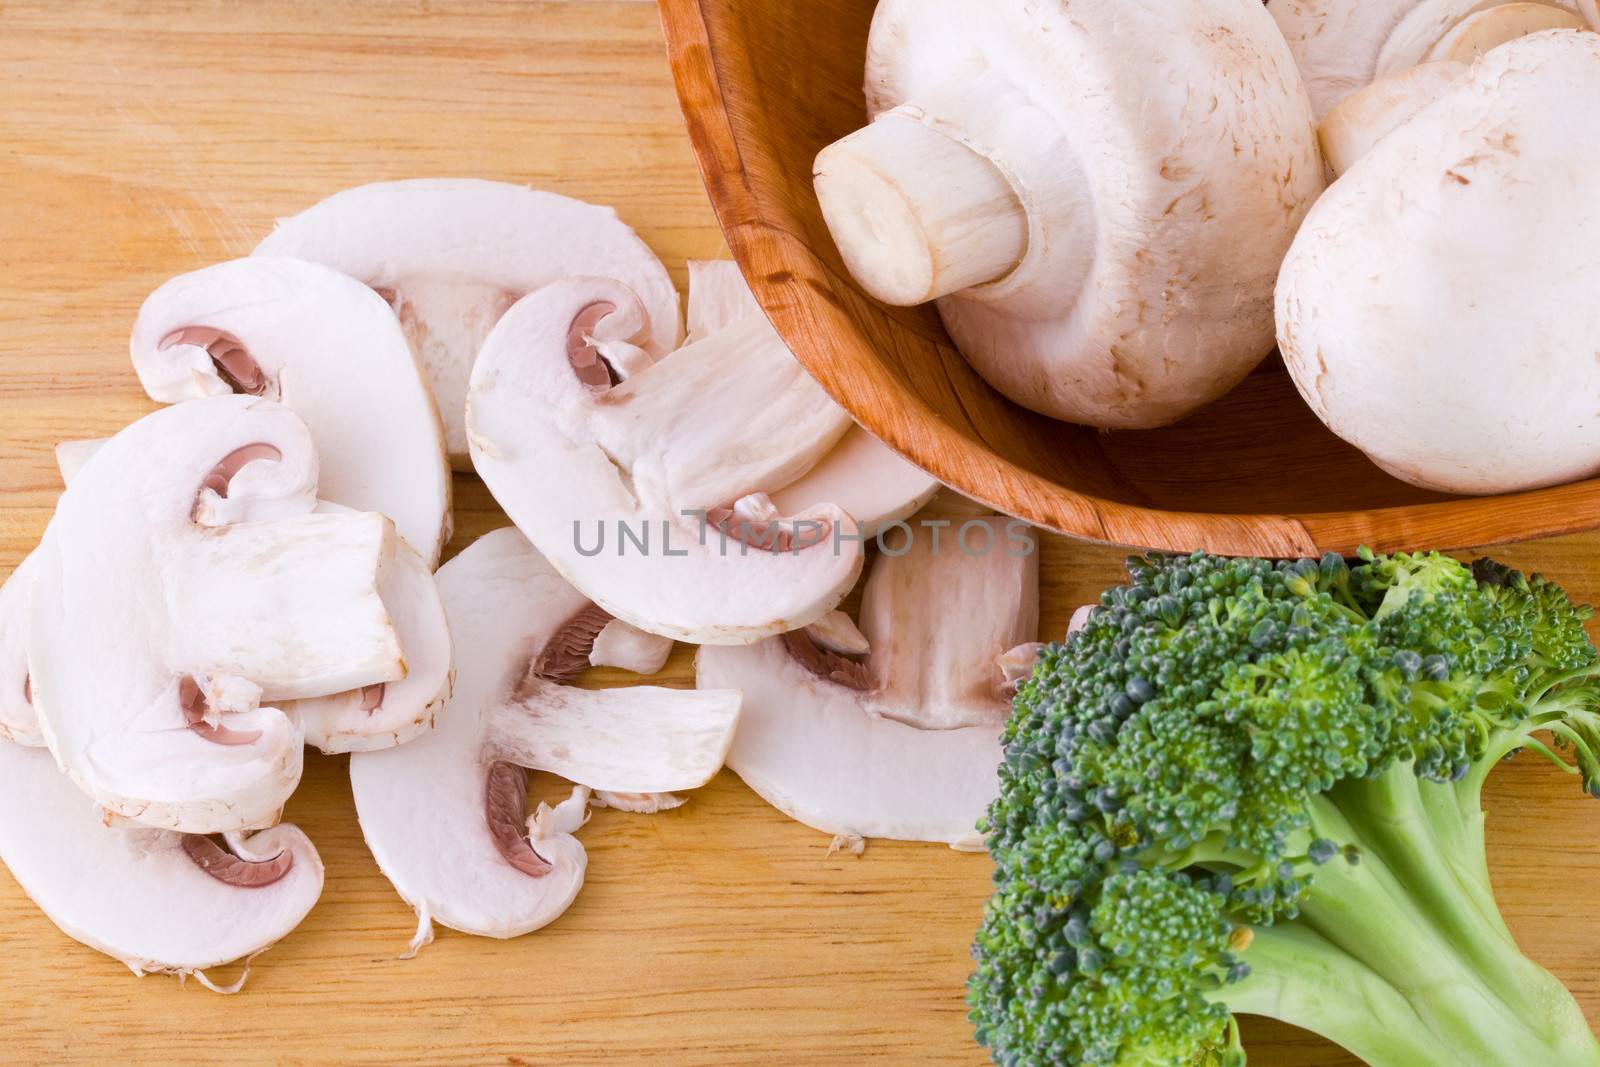 Mushrooms, broccoli by Gbuglok